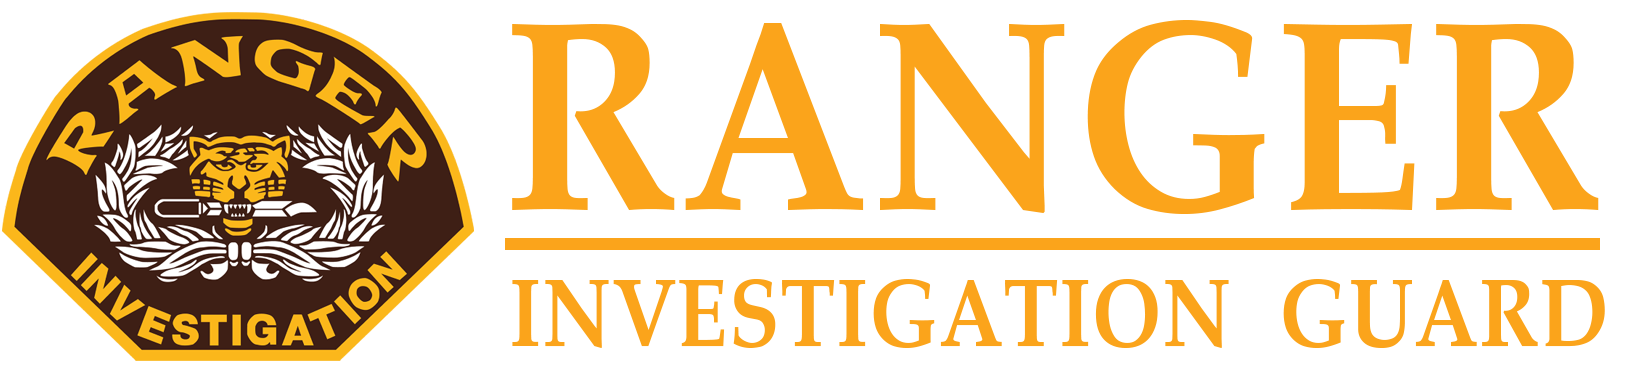 Ranger Investigation Guard